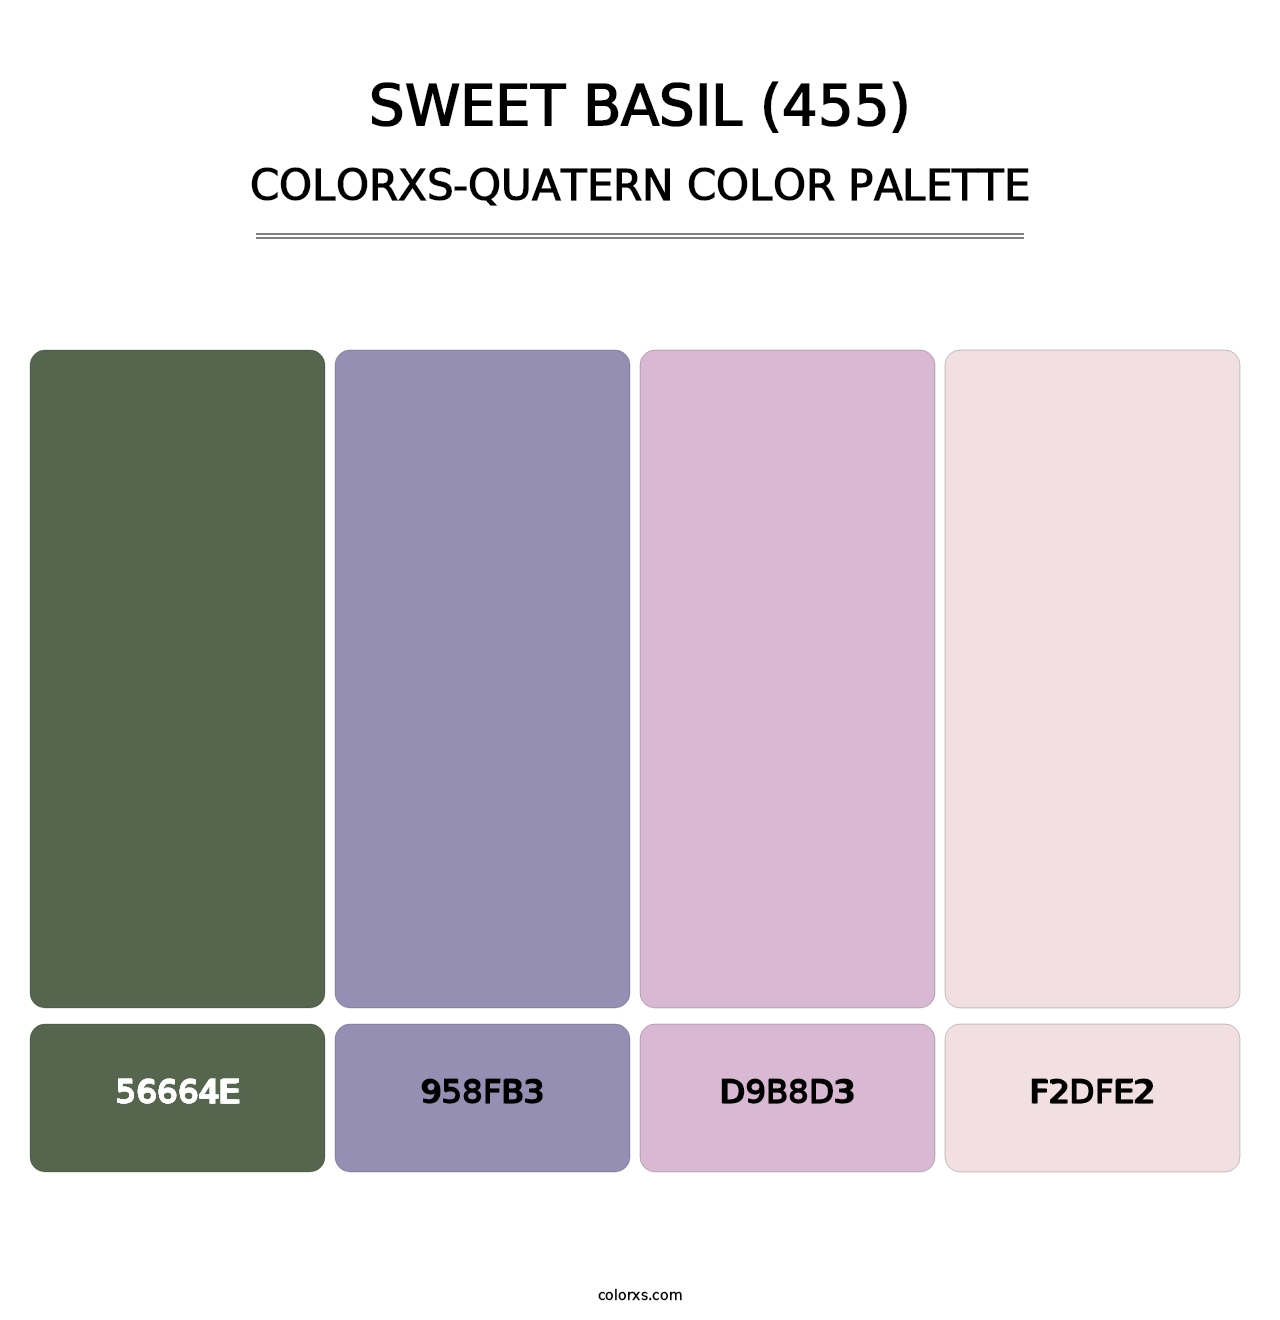 Sweet Basil (455) - Colorxs Quatern Palette